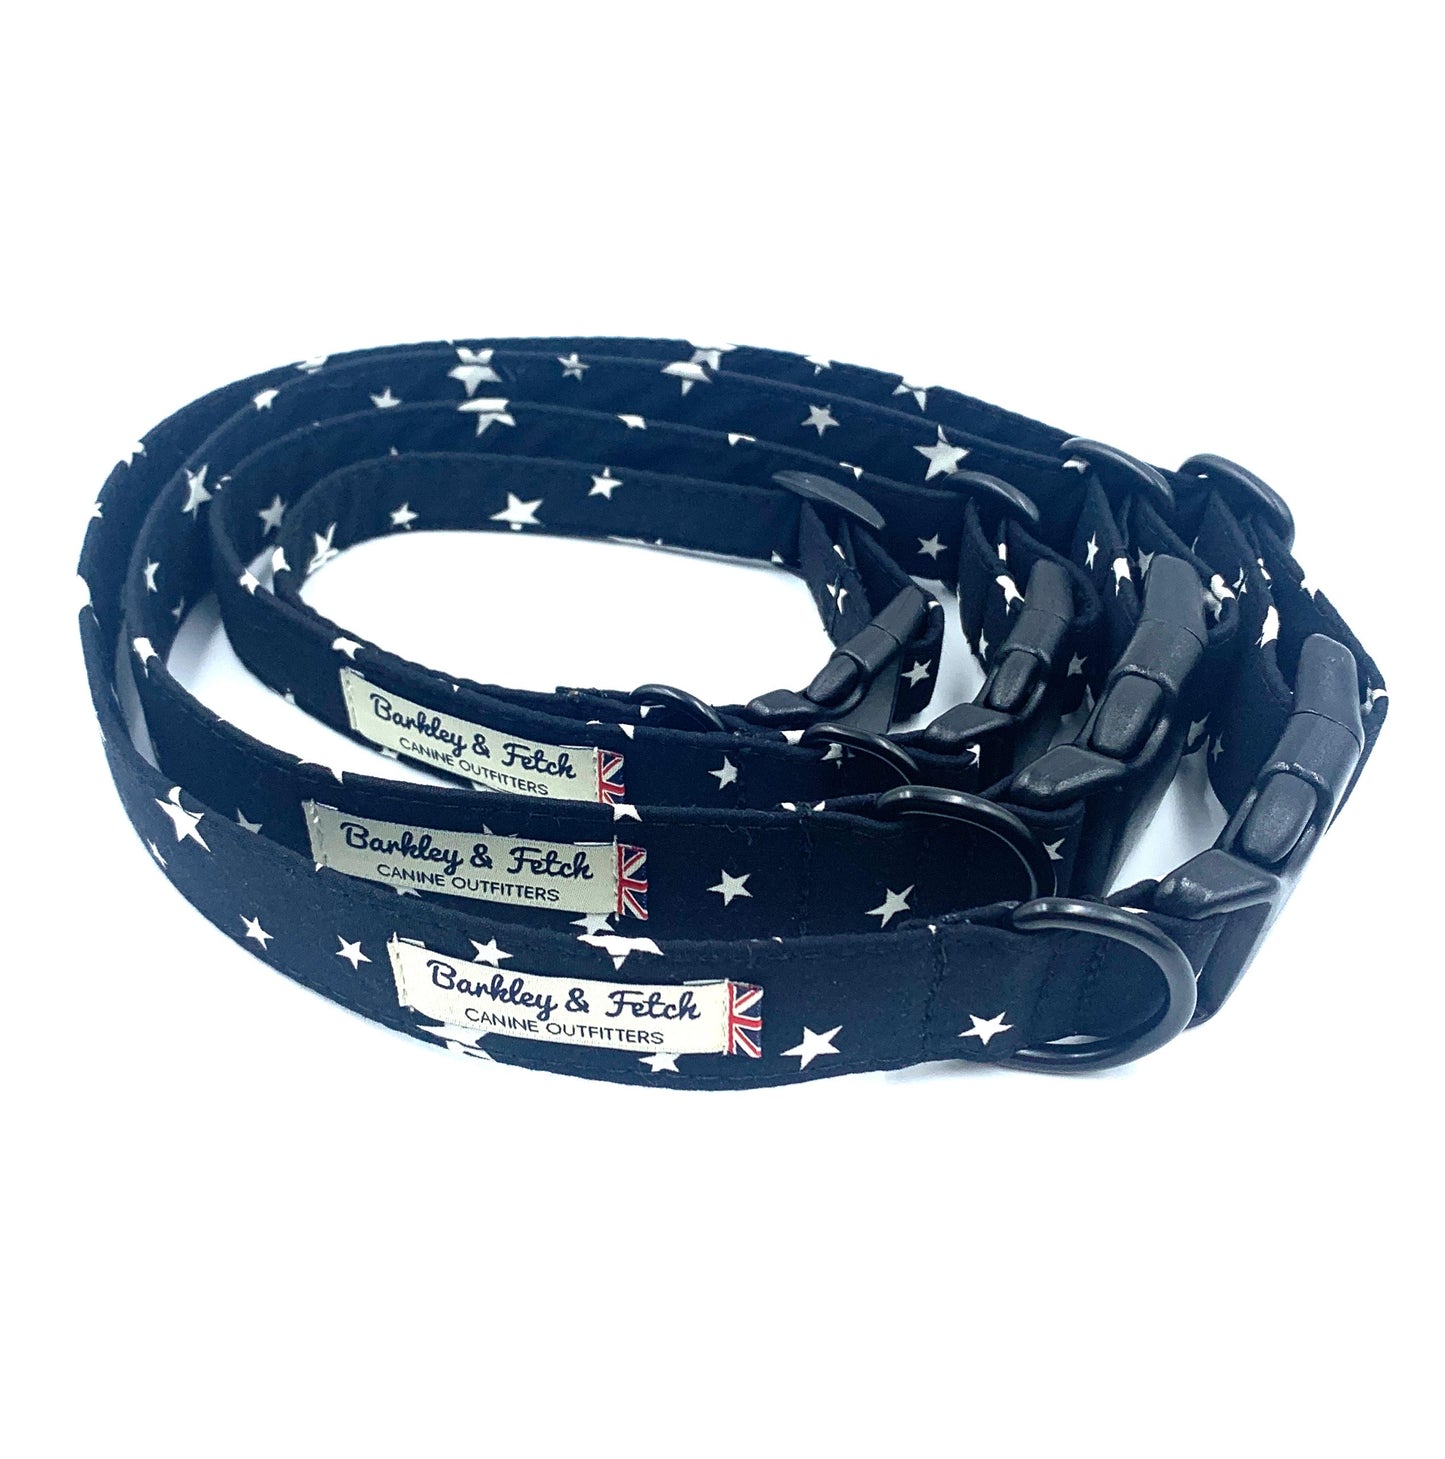 Black Star Print Dog Collar